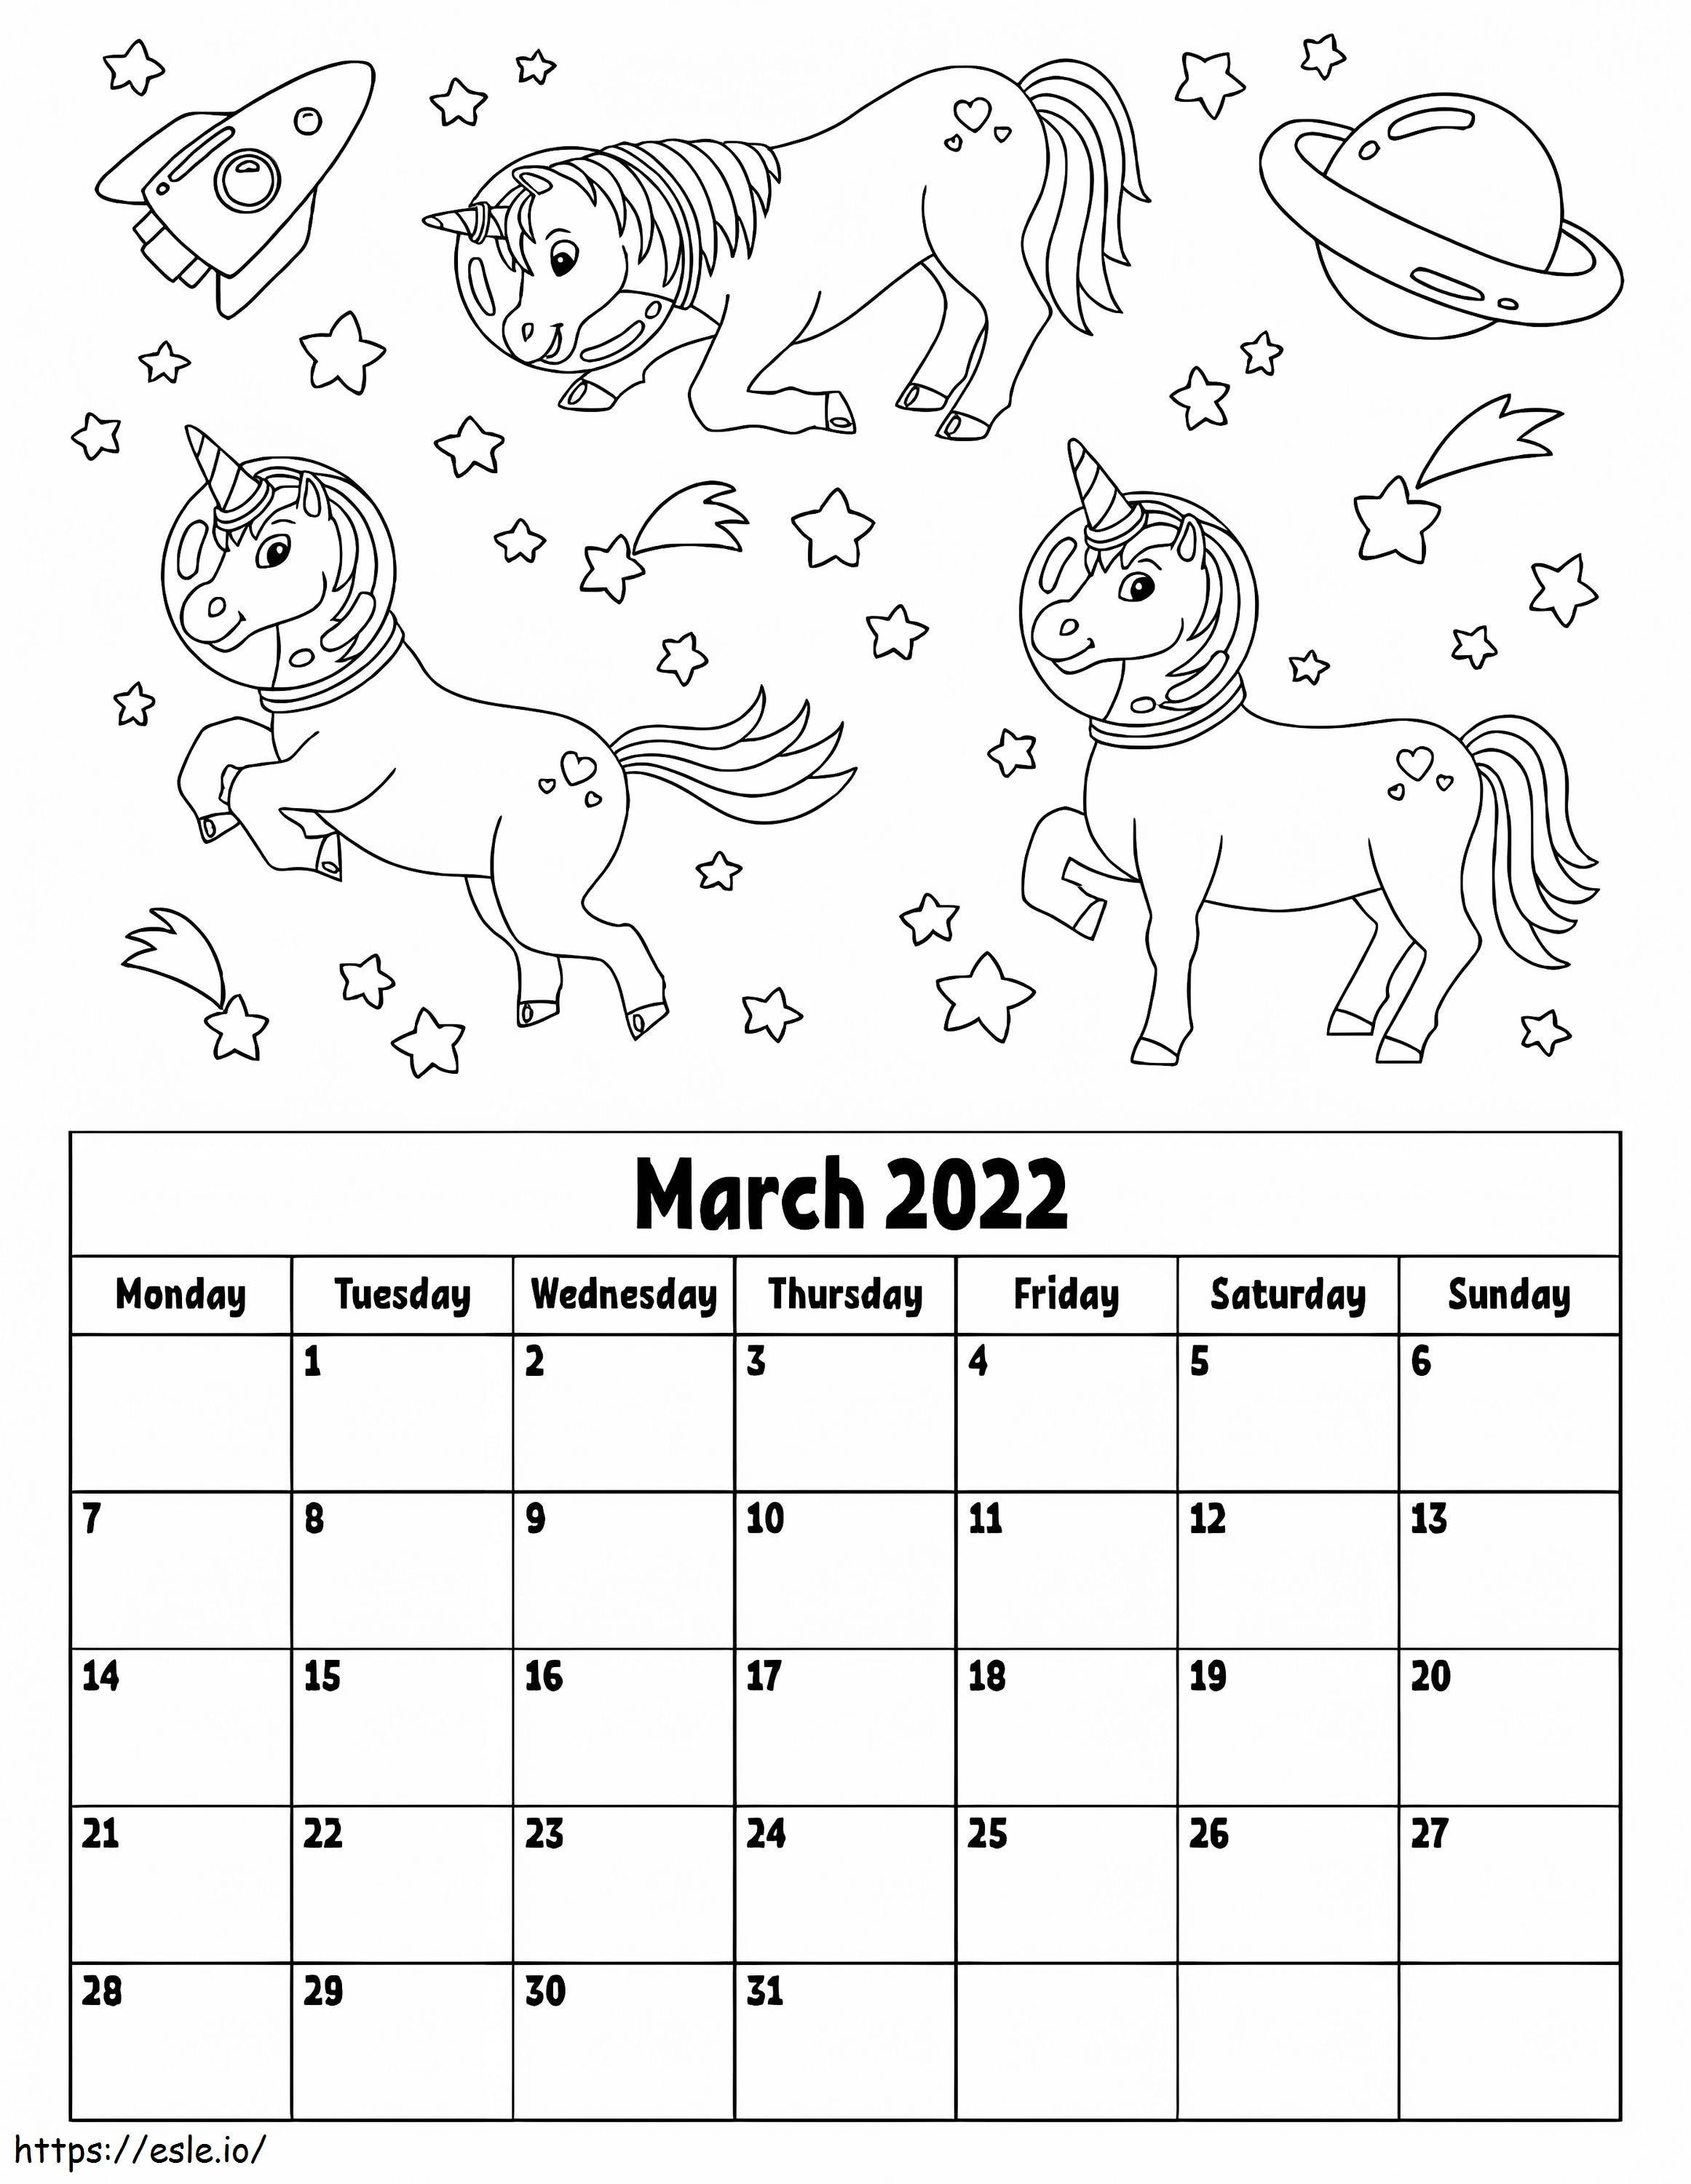 Kalendarz na marzec 2022 r kolorowanka